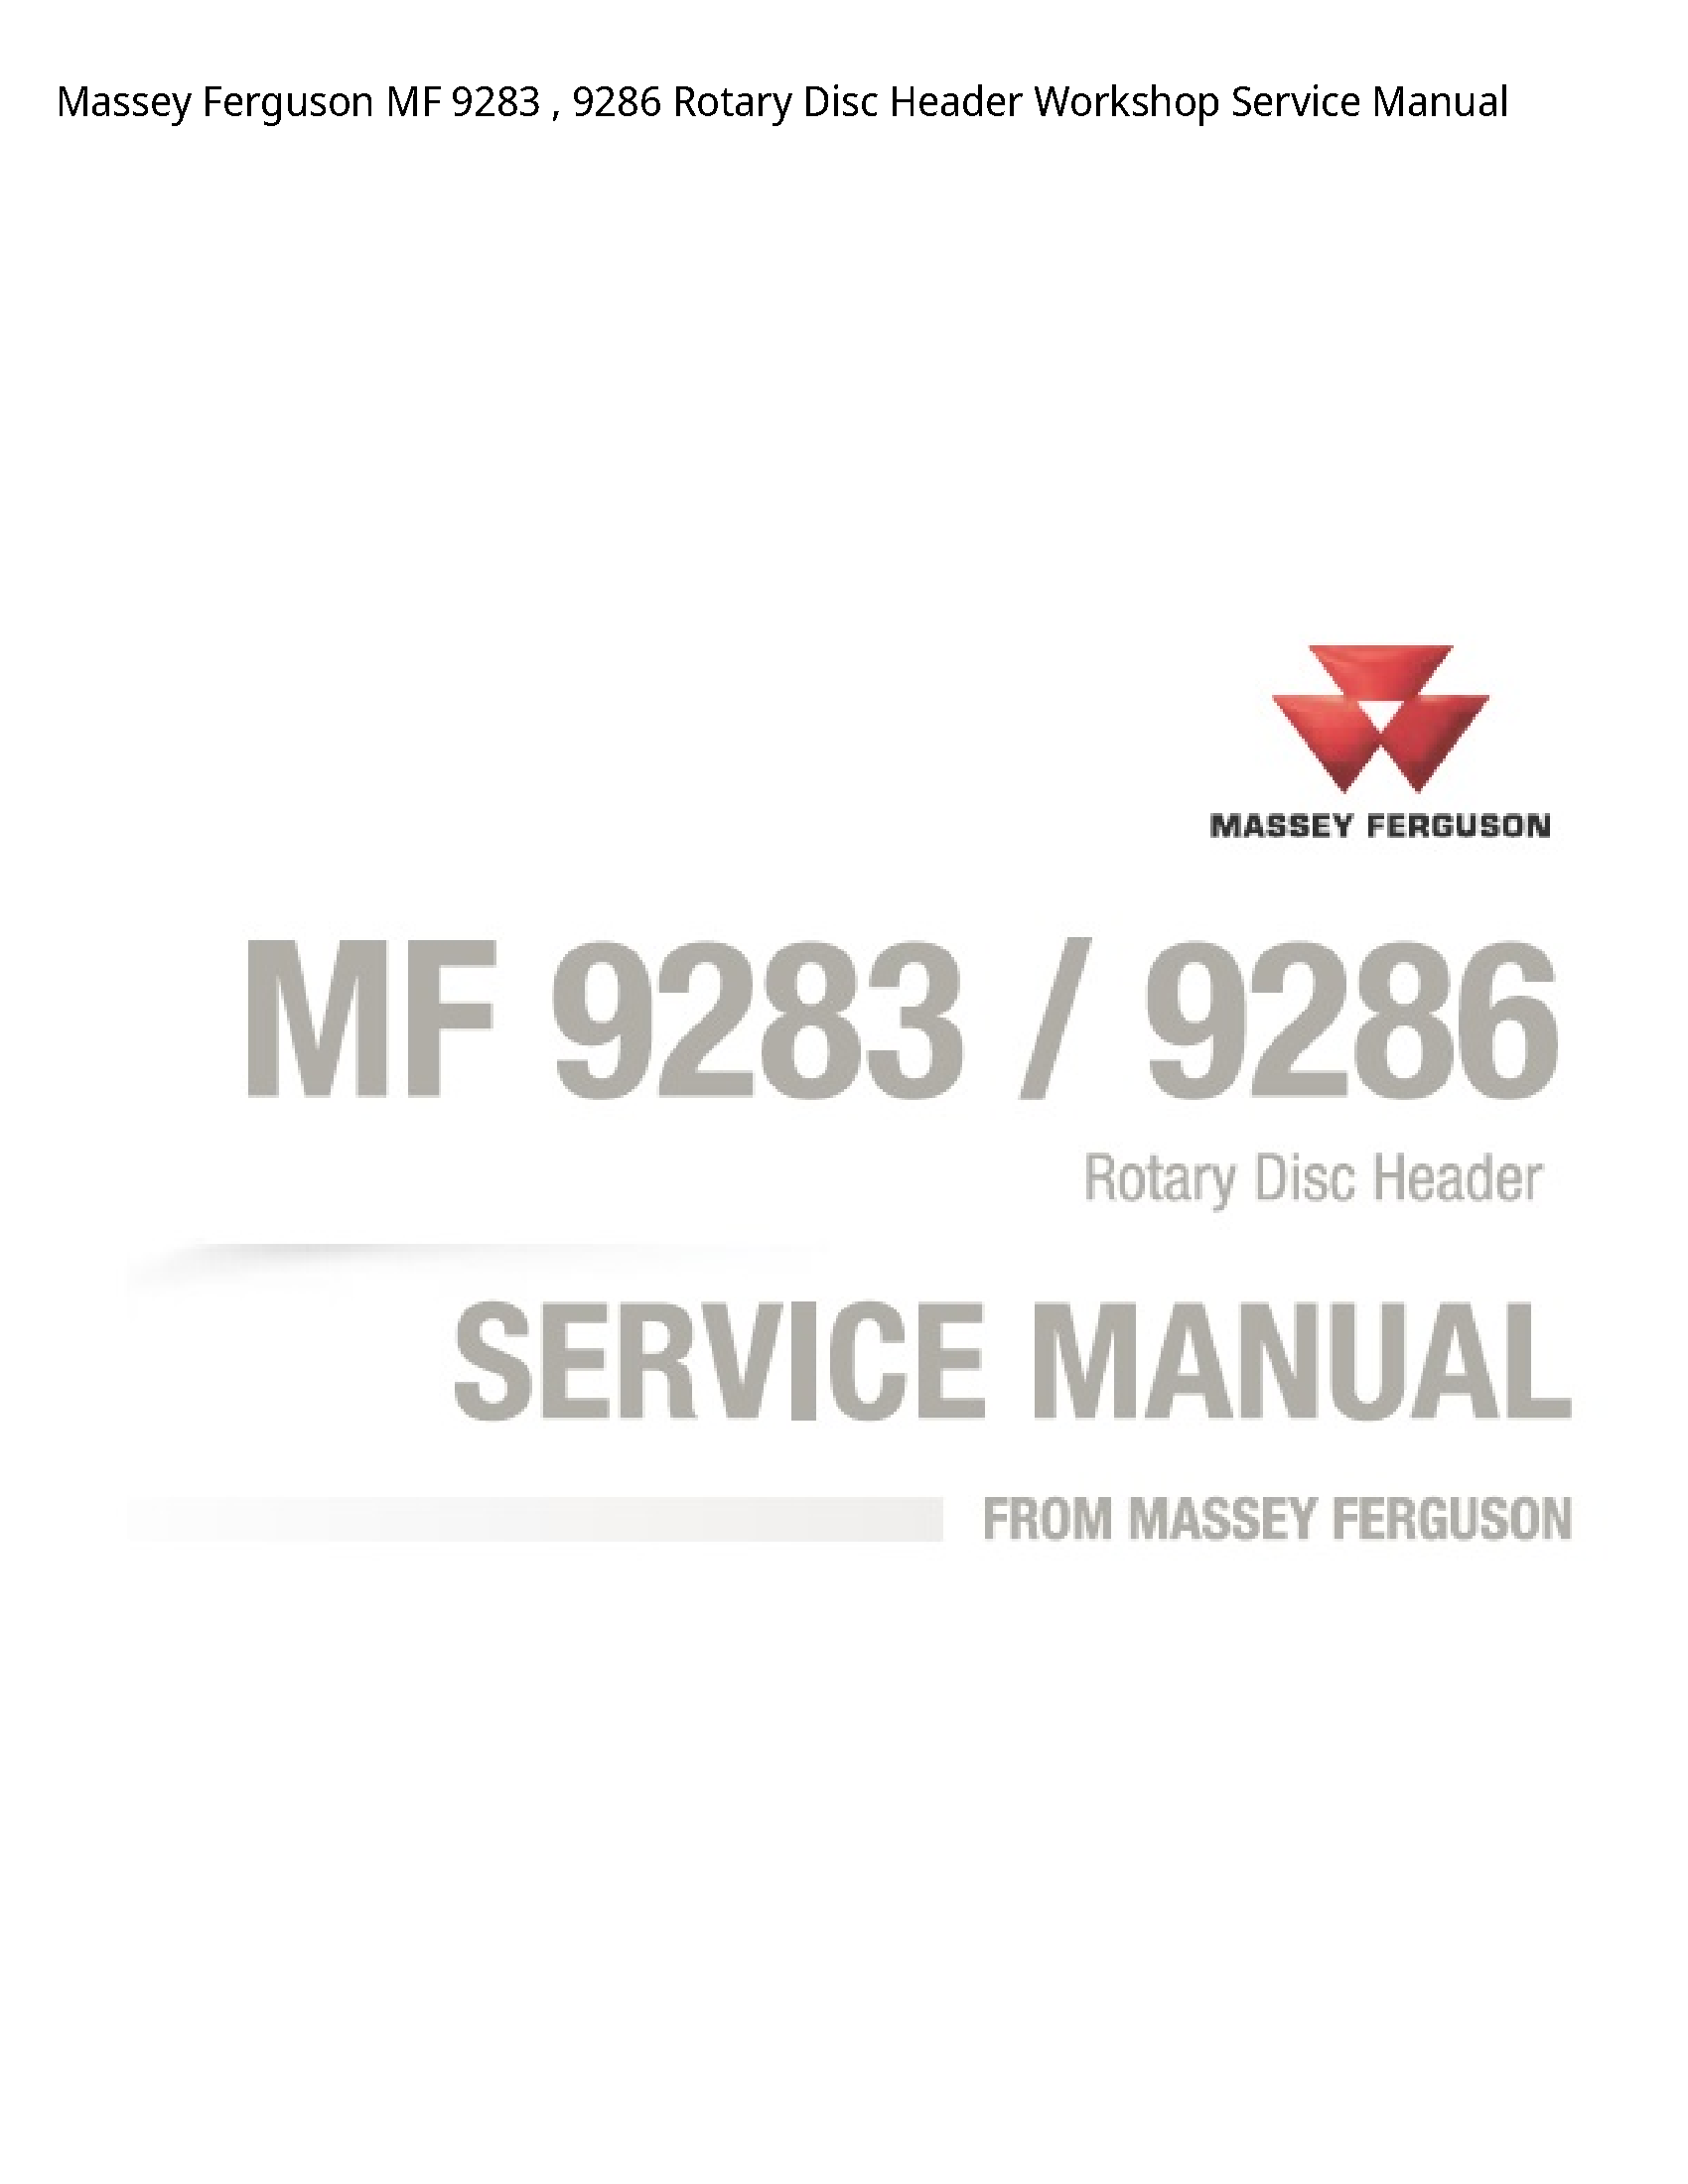 Massey Ferguson 9283 MF Rotary Disc Header Service manual